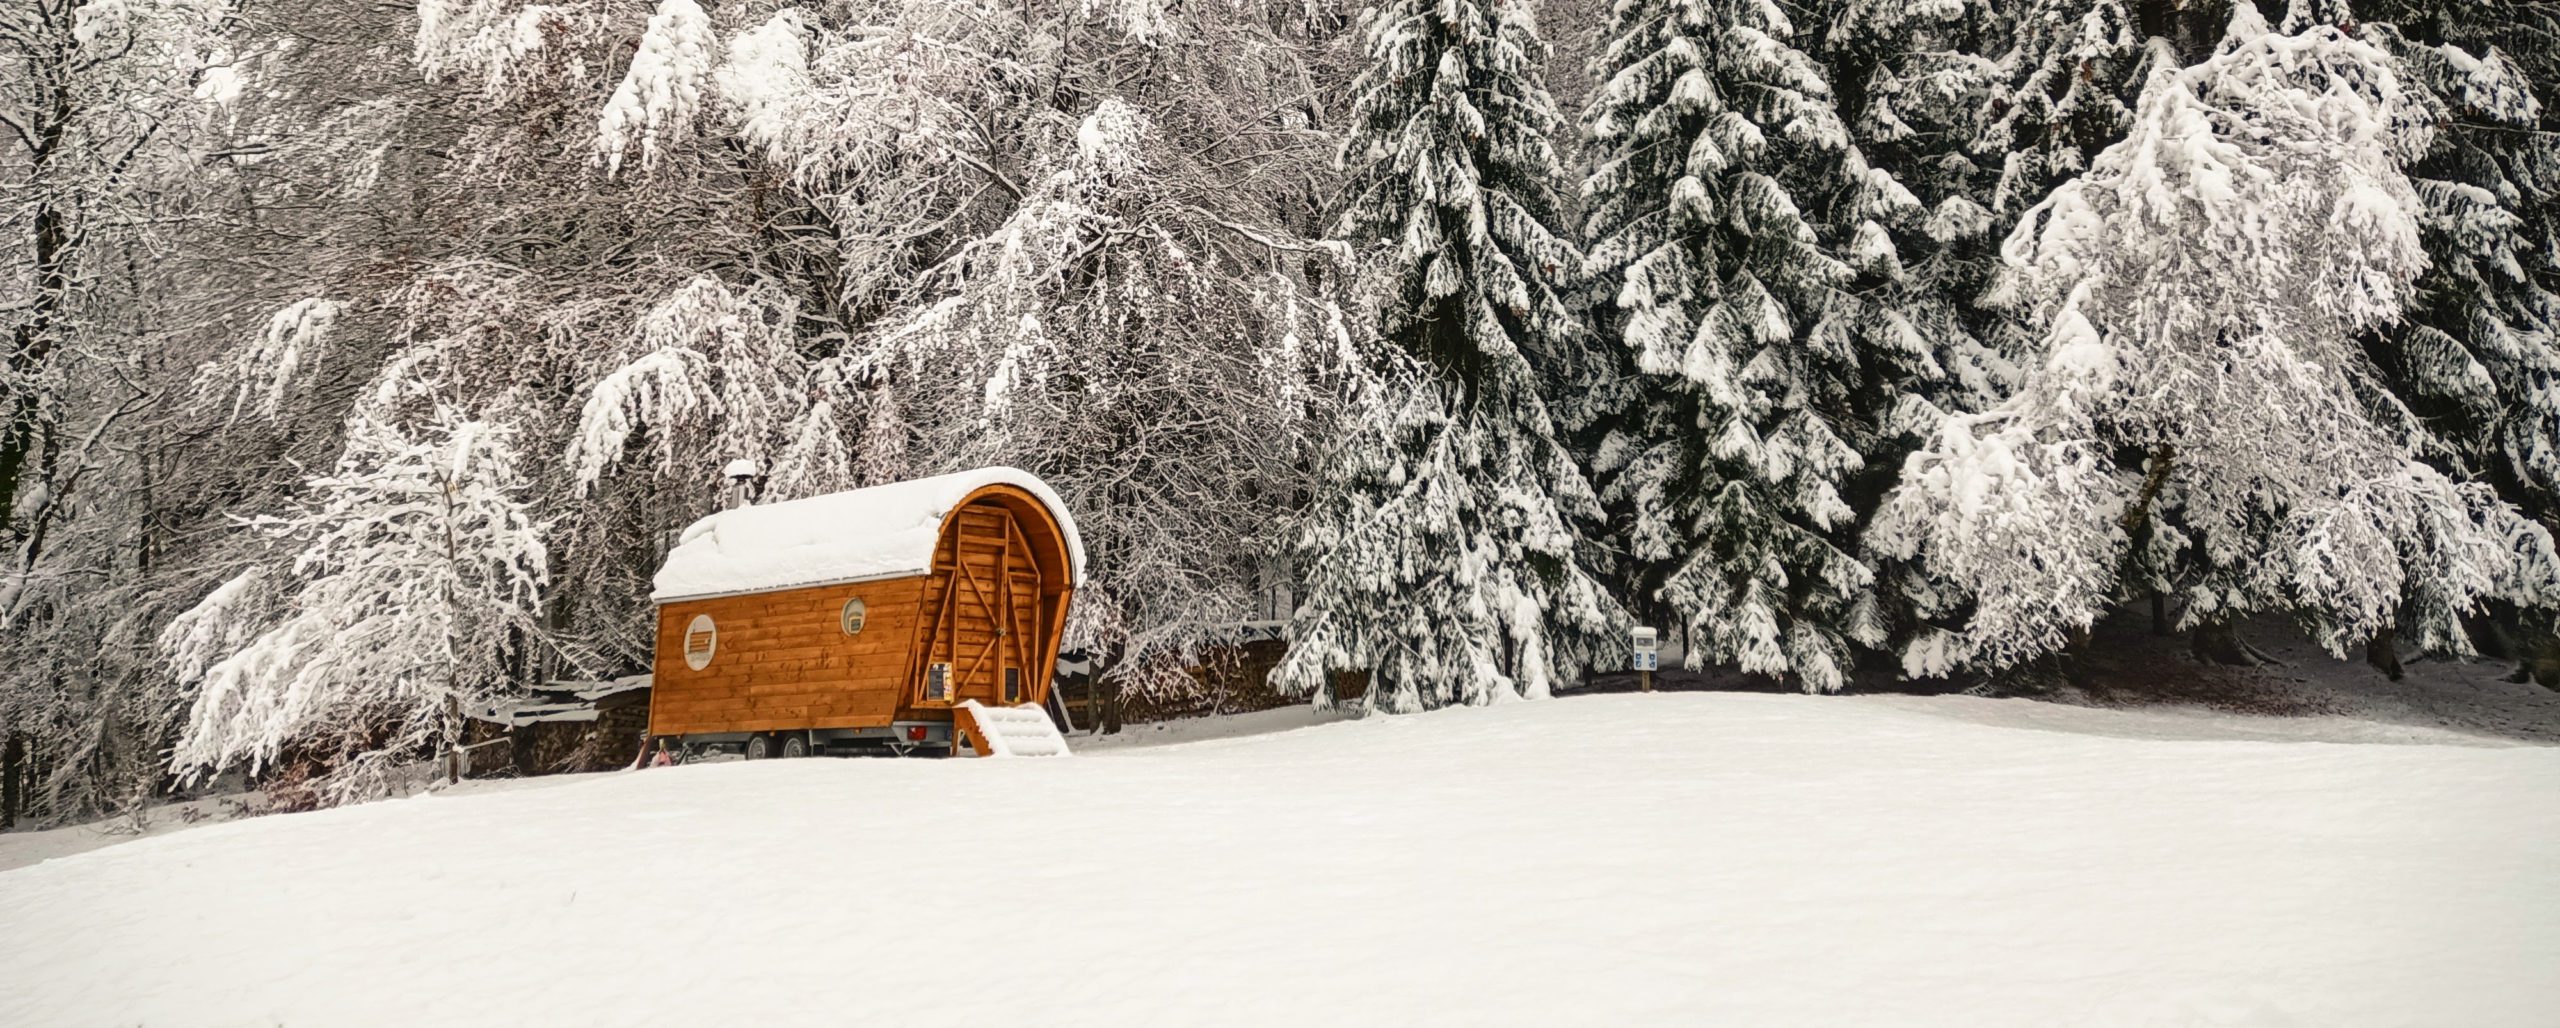 accecy mobile sauna